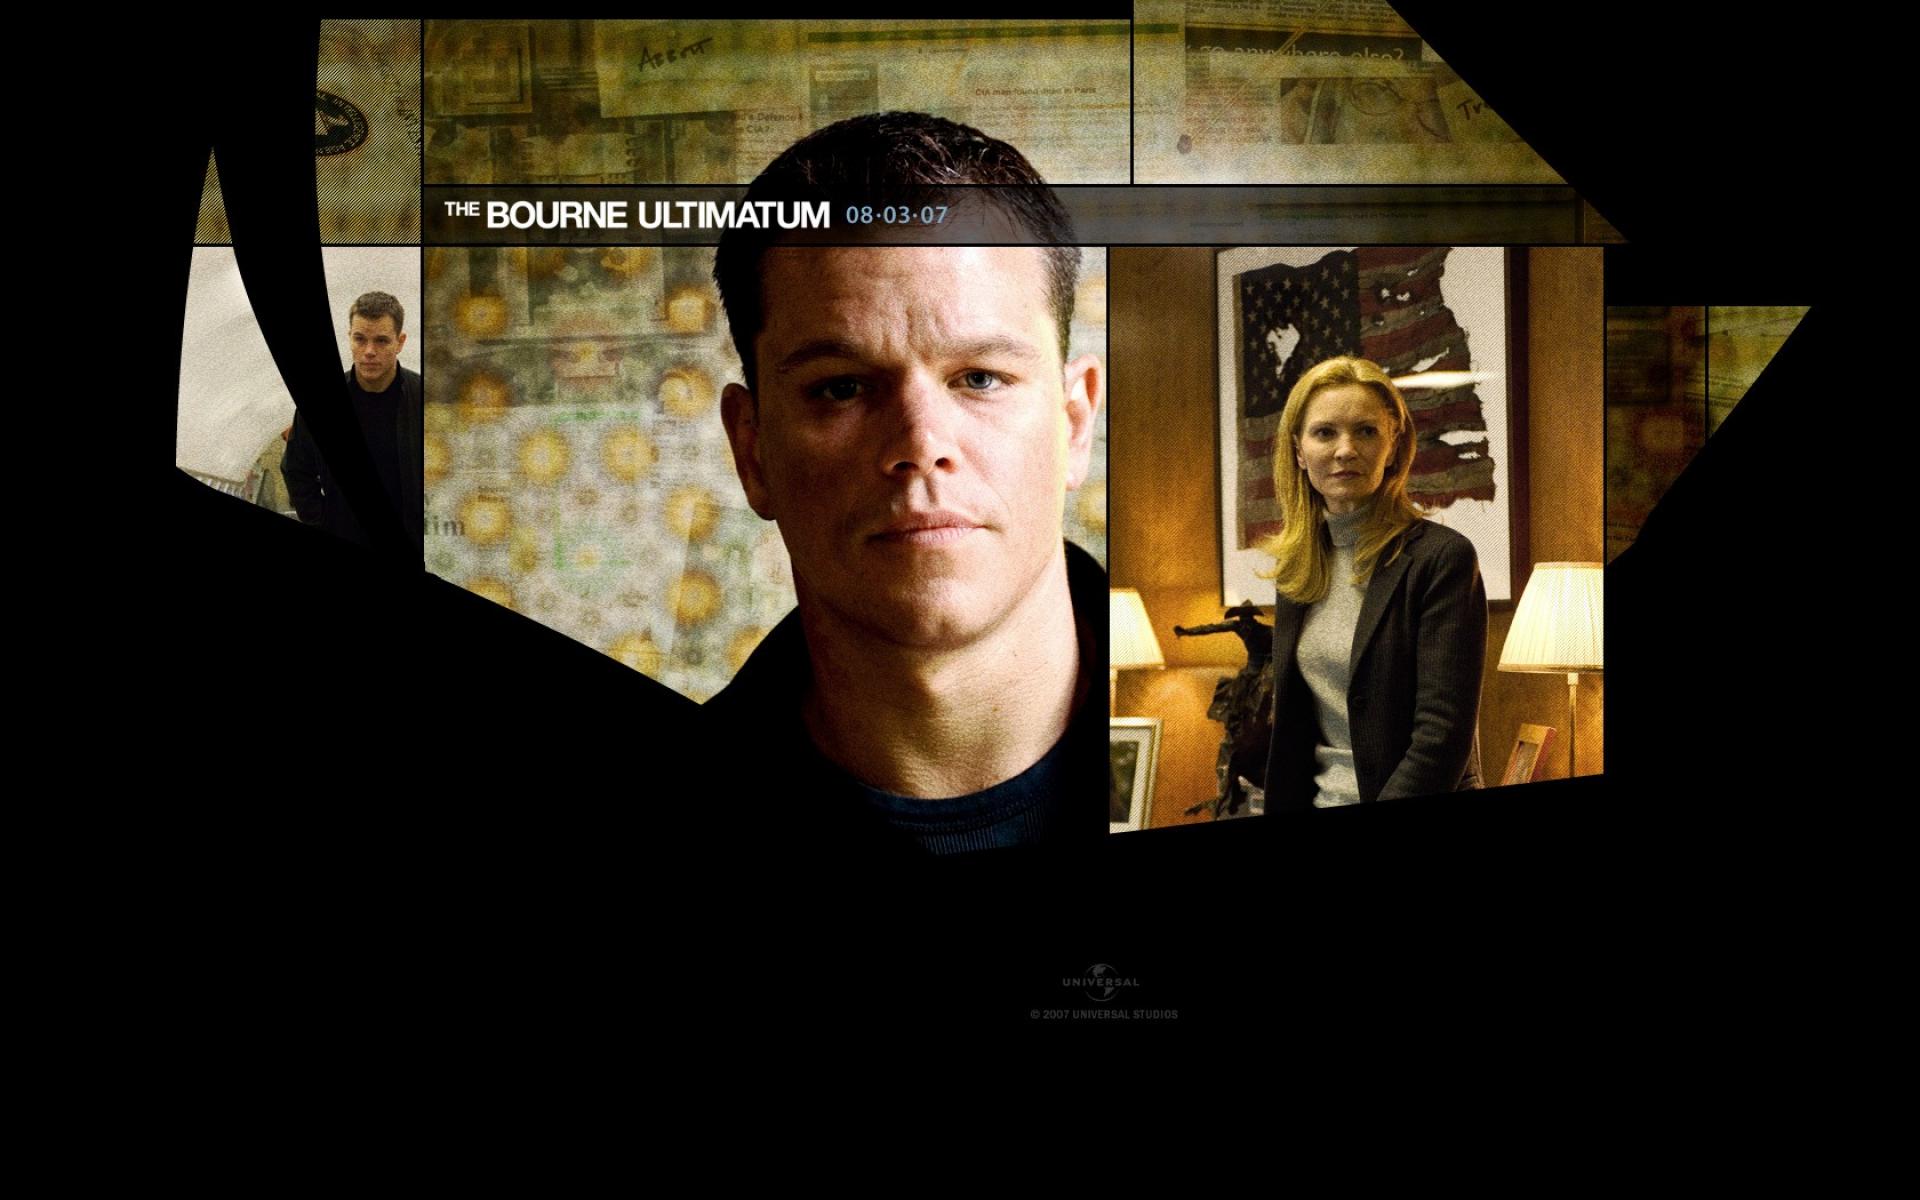 Download hd 1920x1200 Matt Damon PC background ID:110785 for free